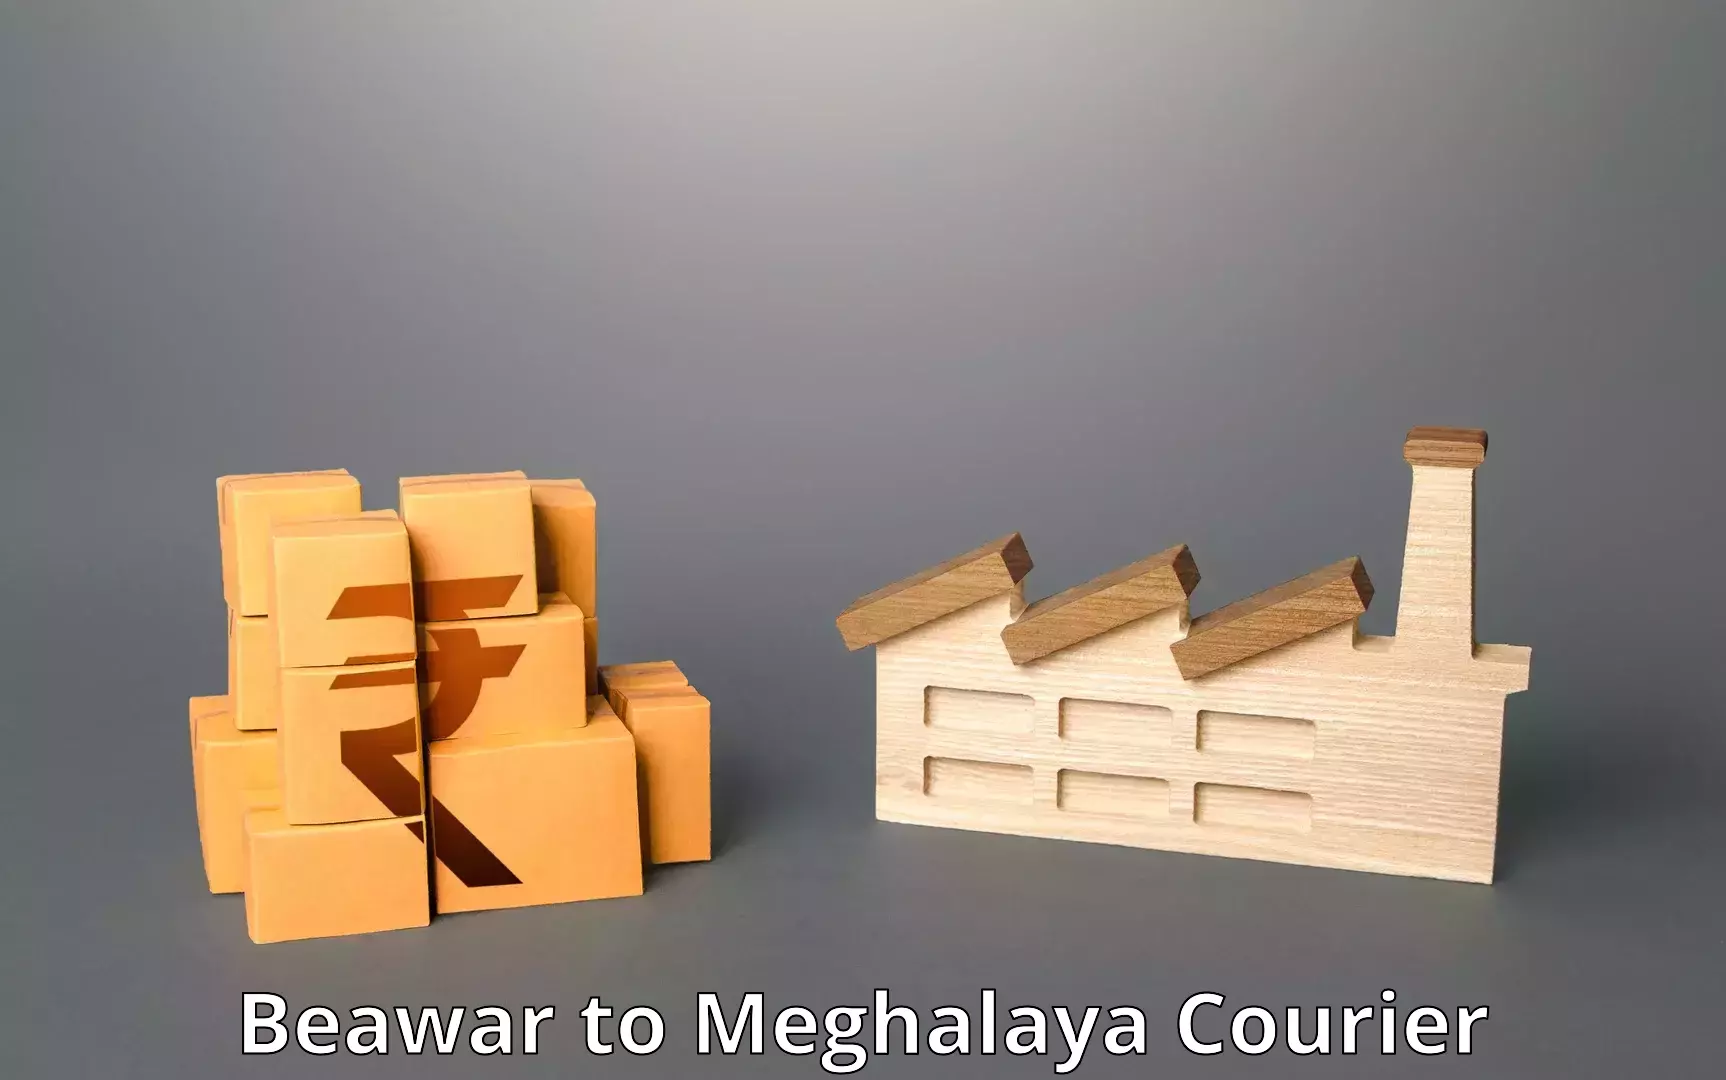 Courier service comparison Beawar to Meghalaya